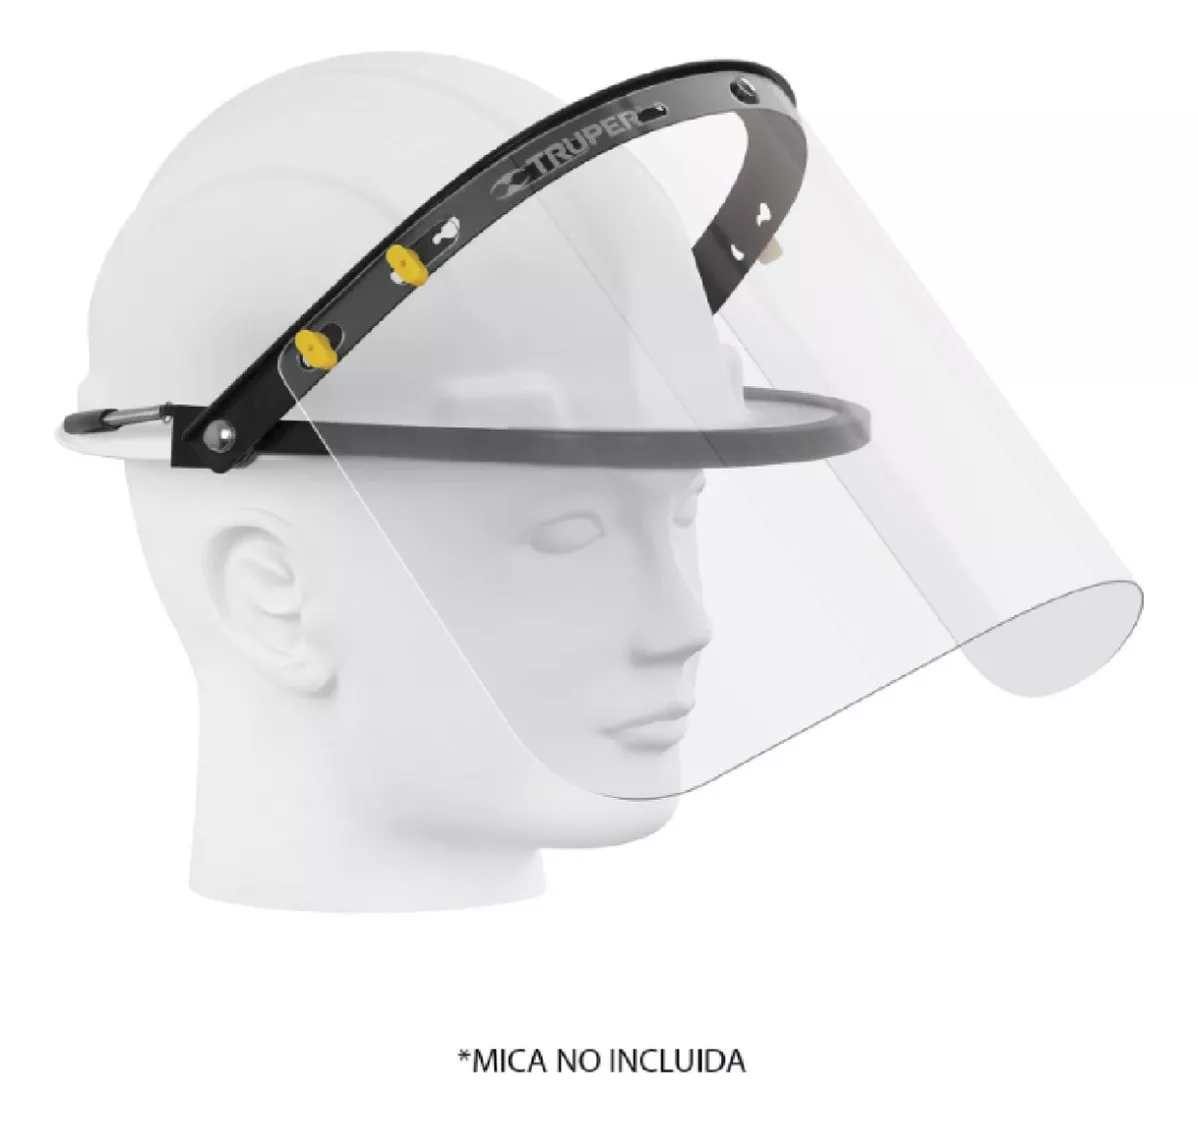 Tercera imagen para búsqueda de protector facial para casco